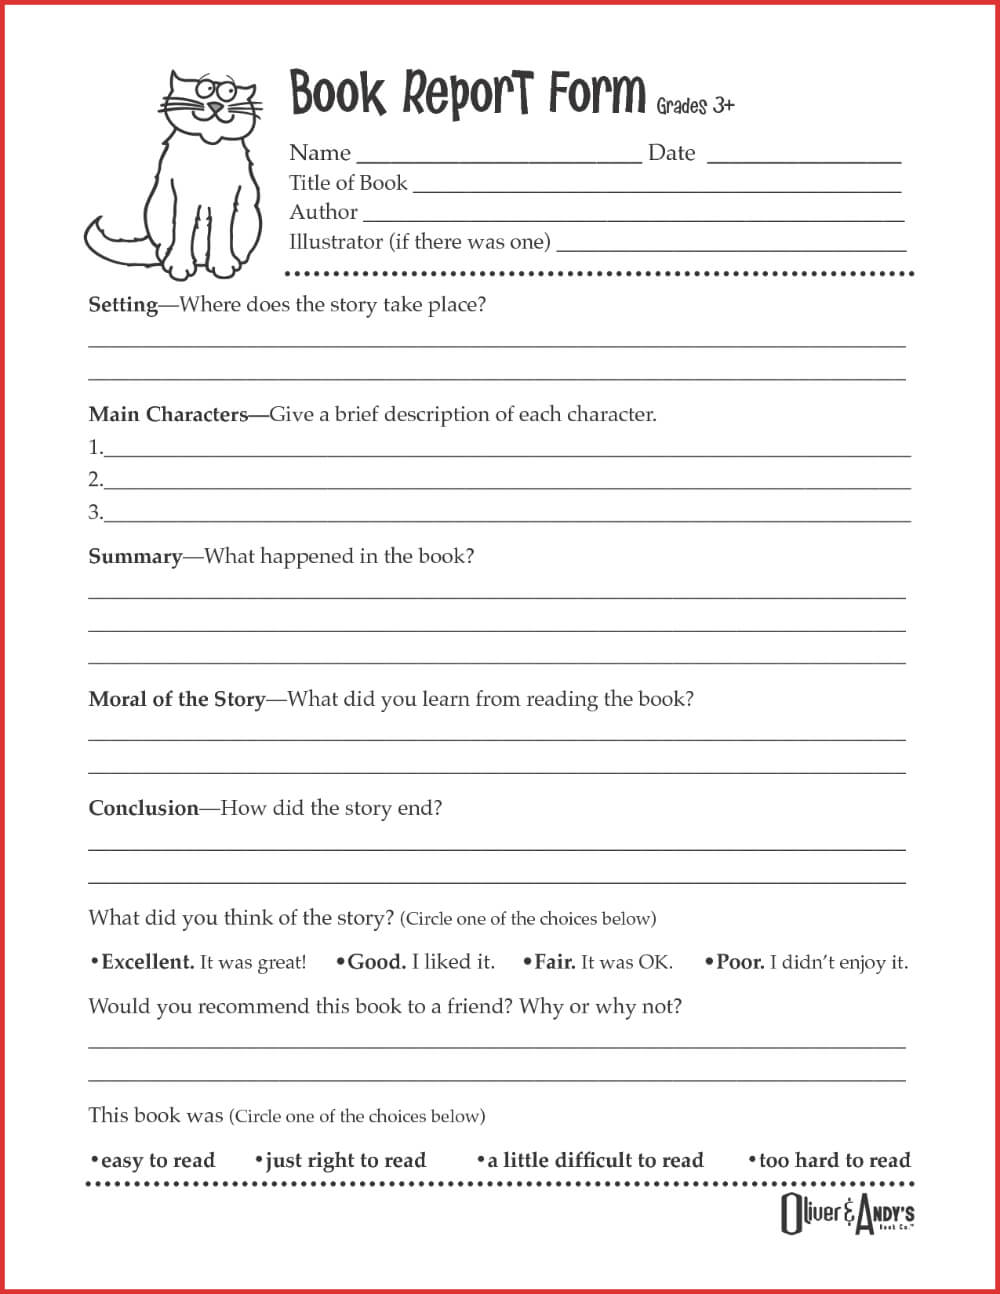 Second Grade Book Report Template Book Report Form Grades 3 With Book Report Template Middle School